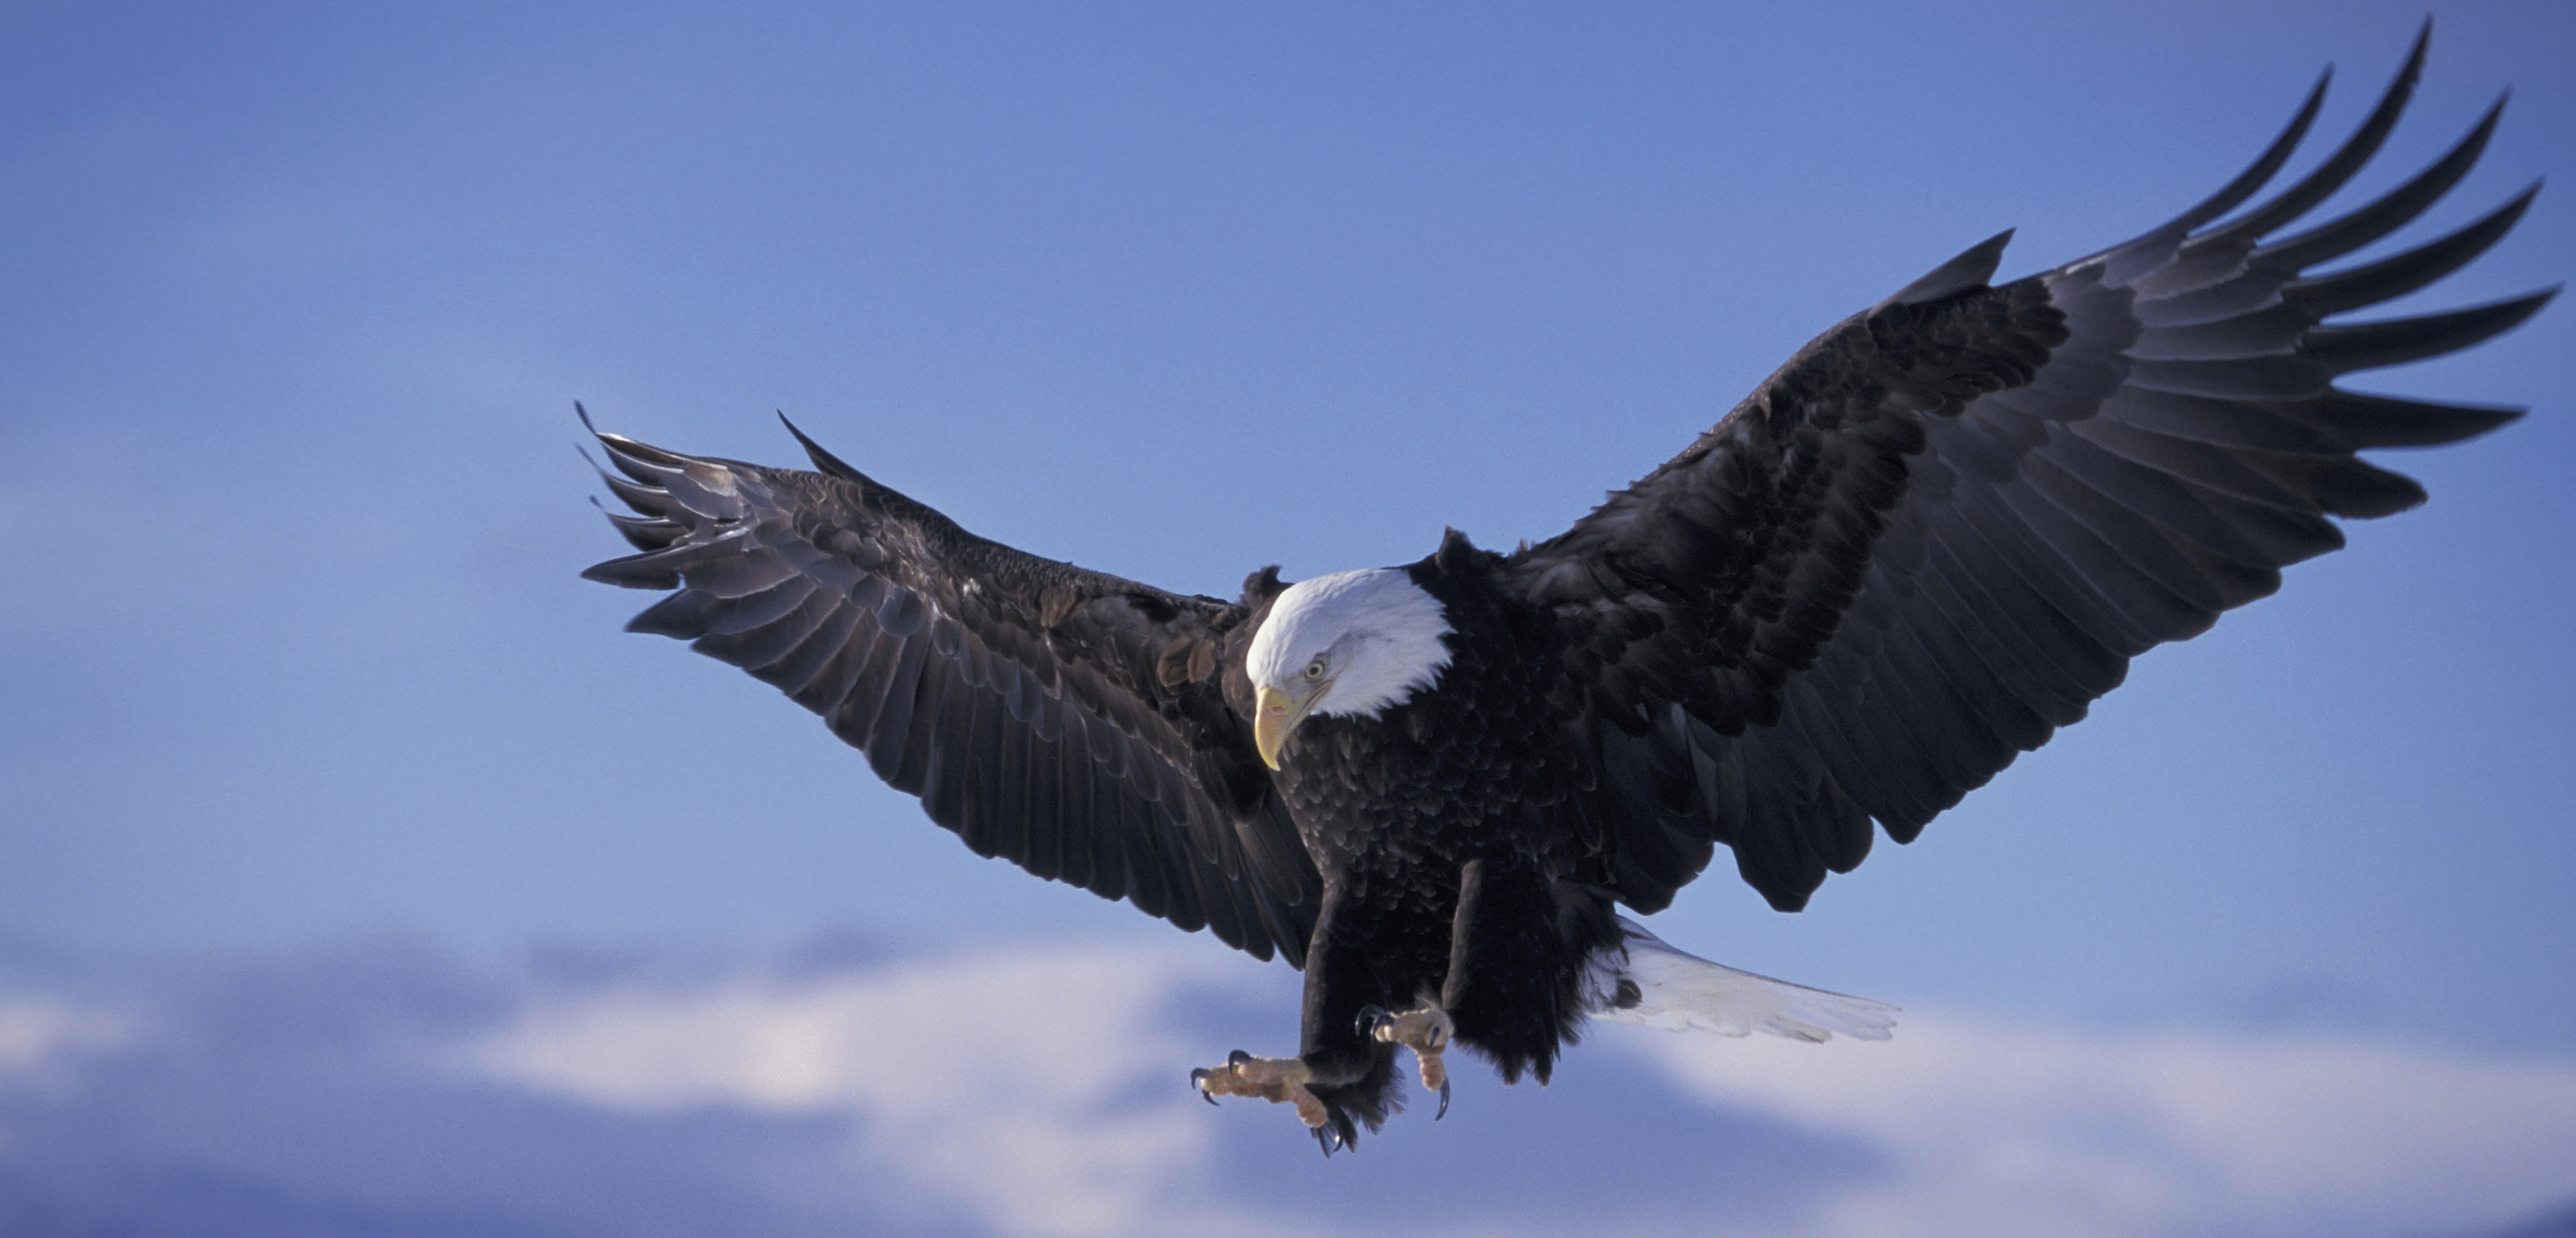 Bald eagles are a conservation success story. Photo by Nicholas Fucci/Design Pics/Corbis